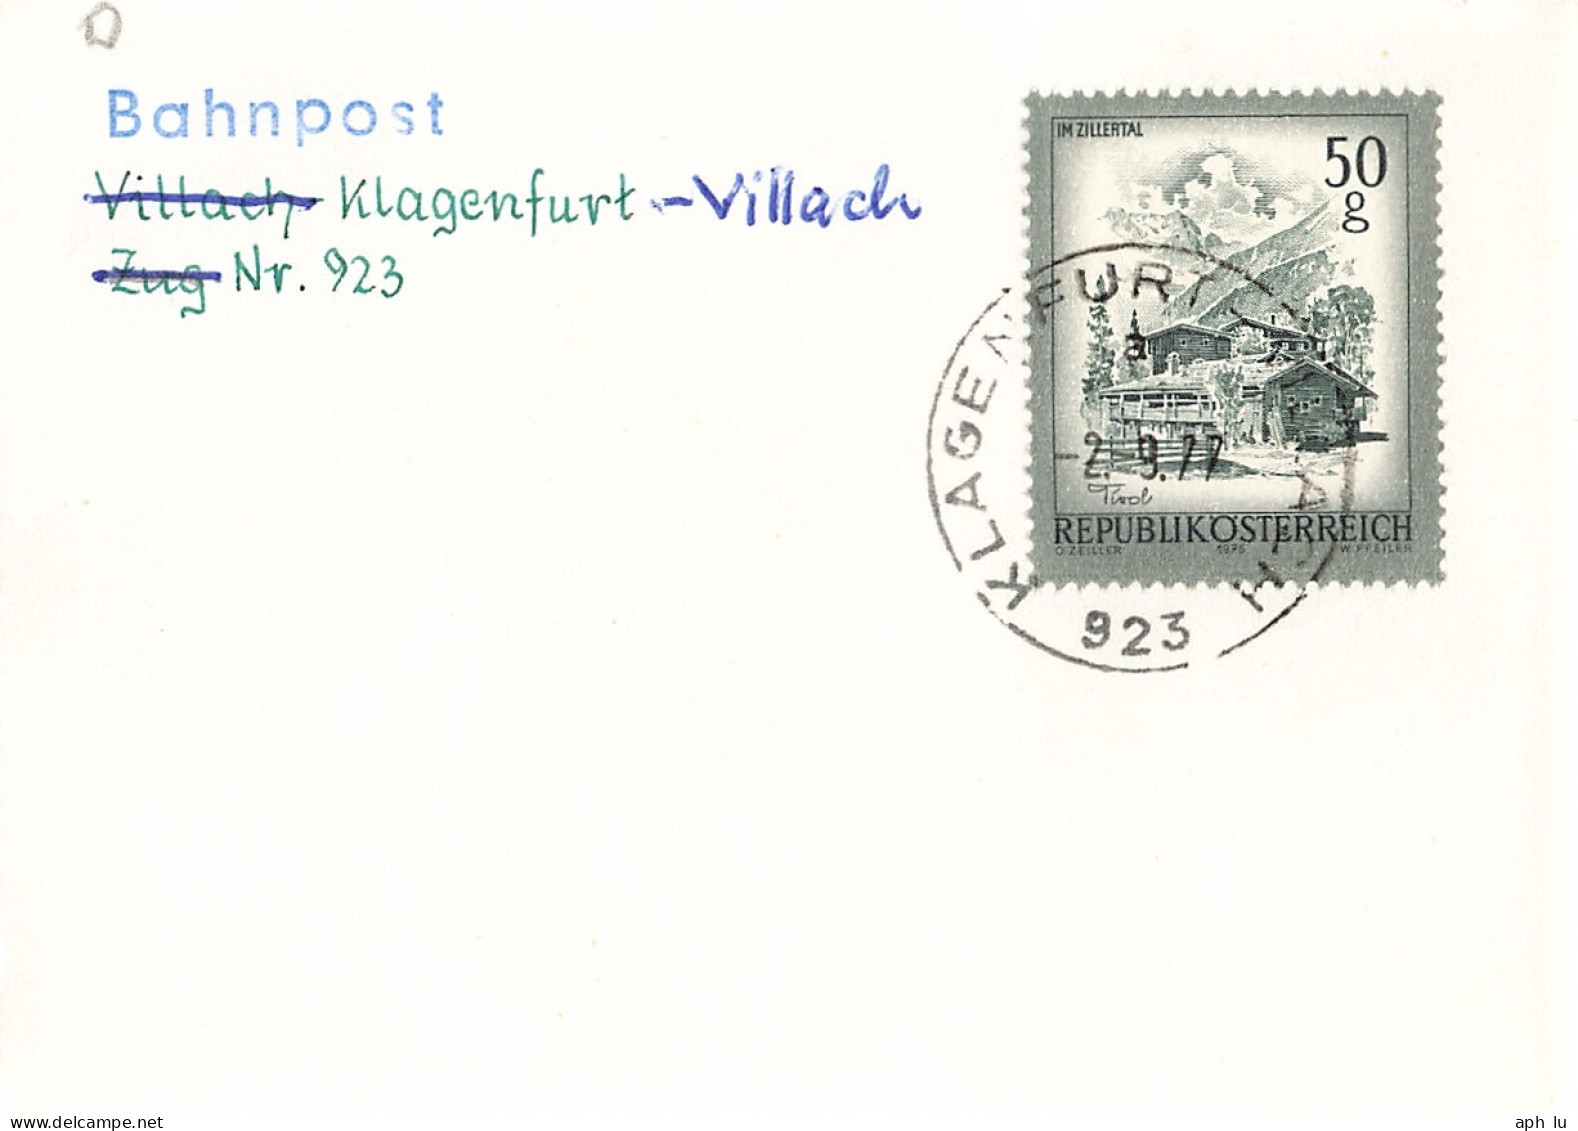 Bahnpost (R.P.O./T.P.O) Klagenfurt-Villach [Ausschnitt] (AD3098) - Briefe U. Dokumente